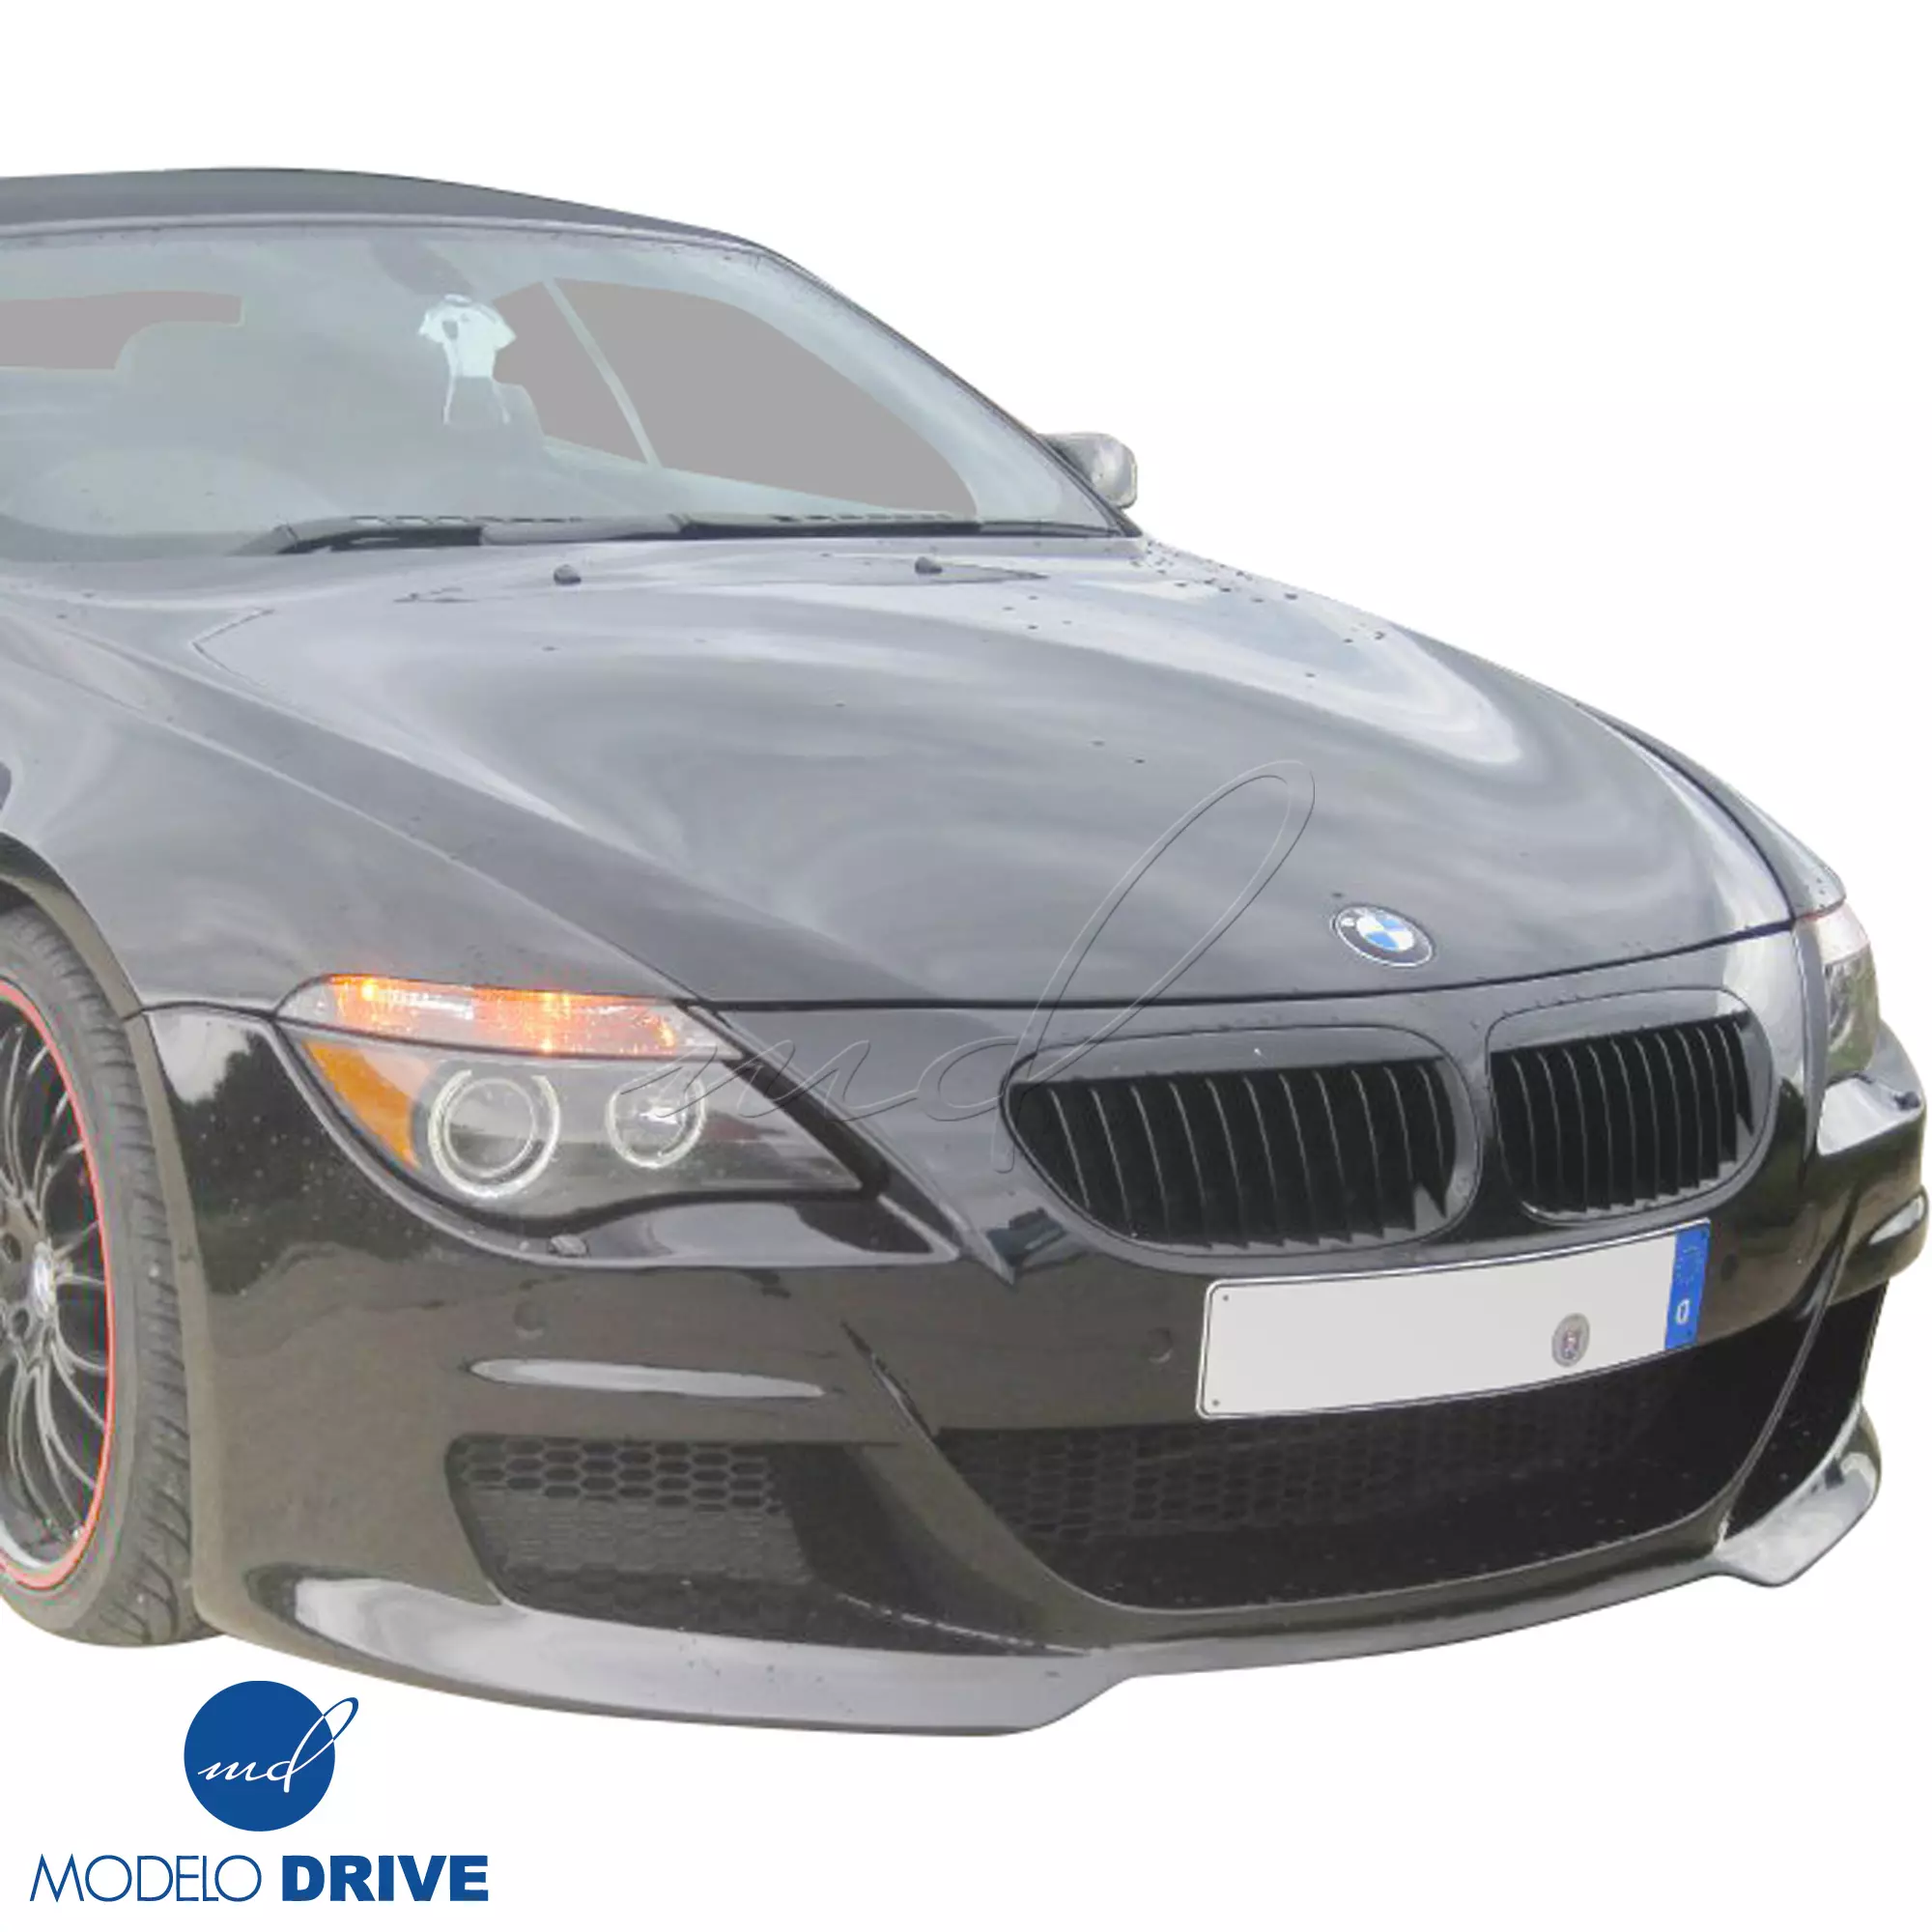 ModeloDrive FRP LDES Body Kit 4pc > BMW 6-Series E63 E64 2004-2010 > 2dr - Image 15